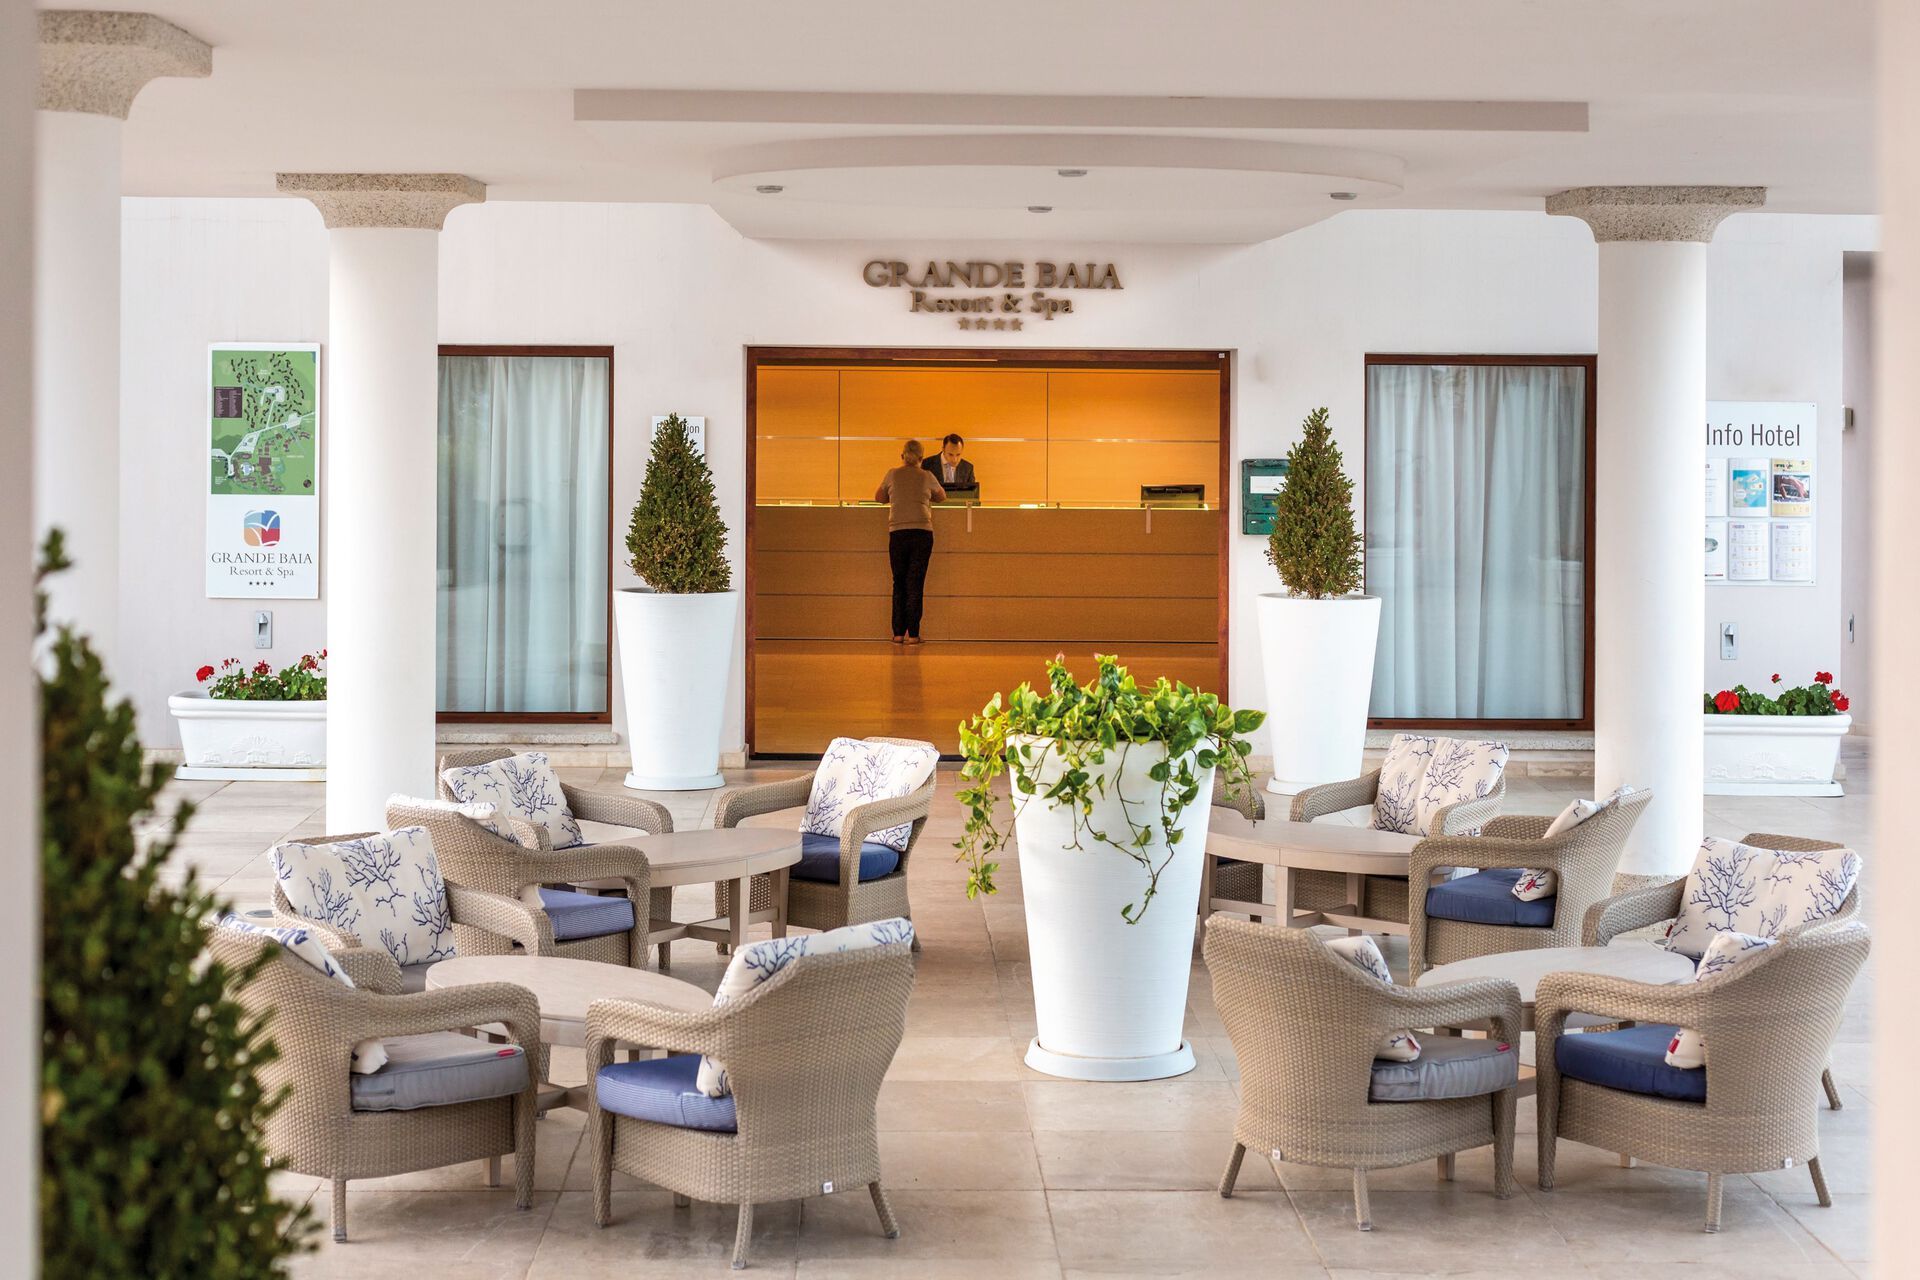 Italie - Sardaigne - Hôtel Grande Baia Resort & Spa 4*